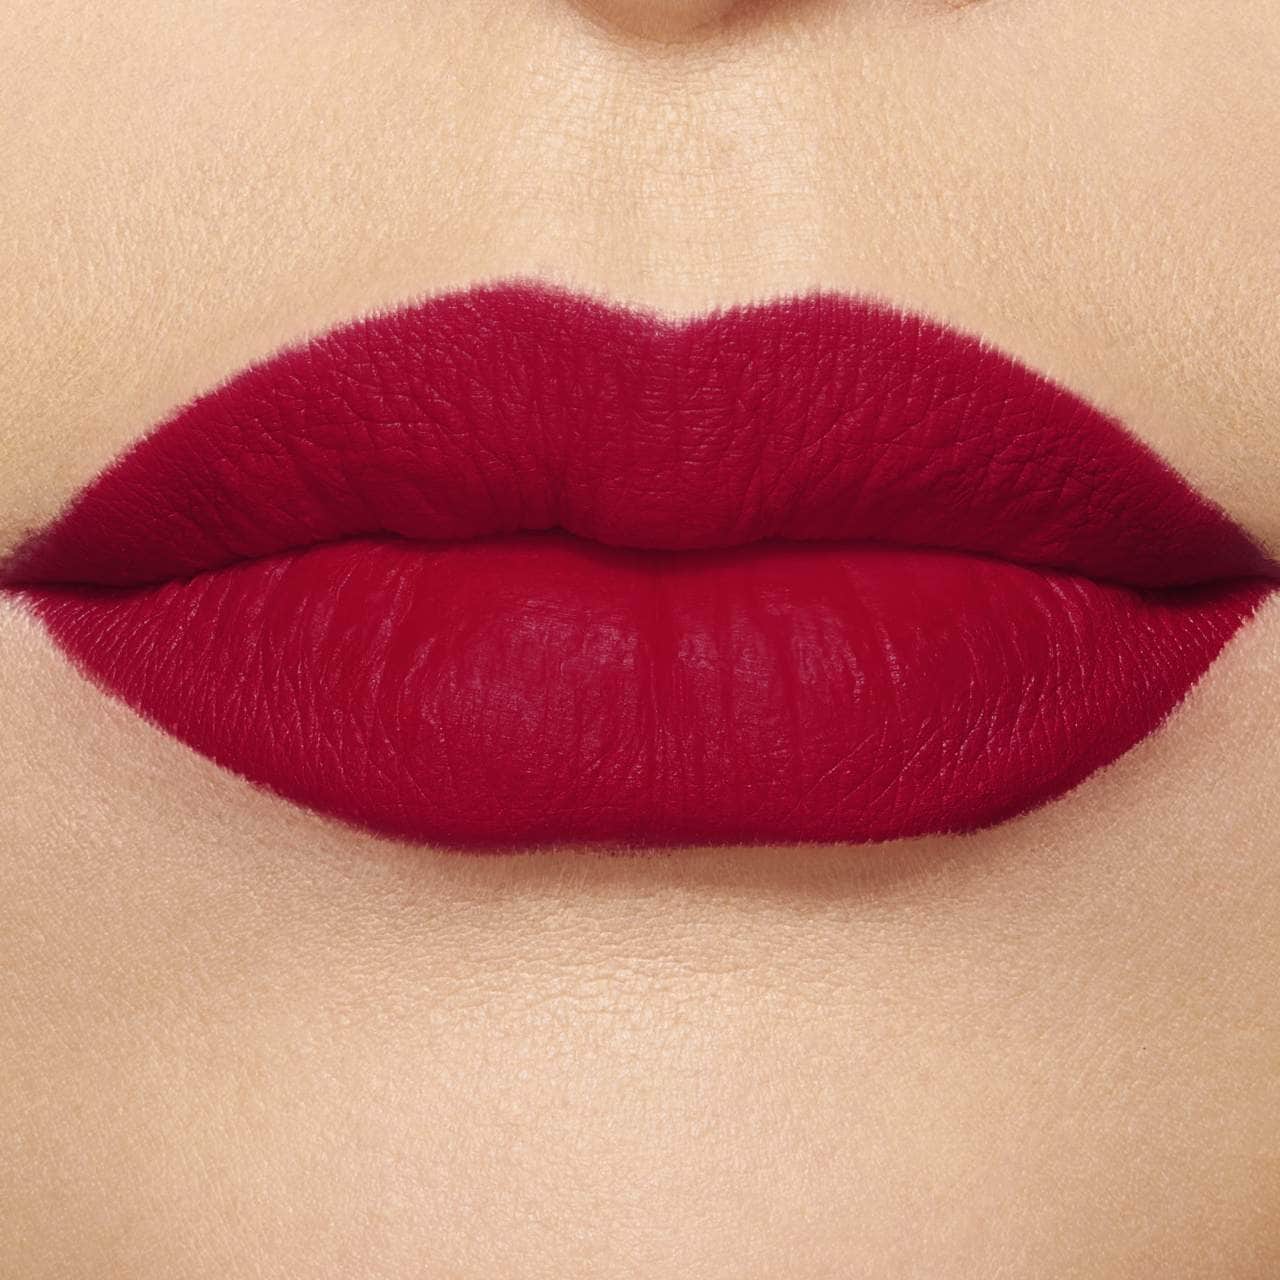 Sephora Cream Lip Stain in #01 Always Red - MINI SIZE